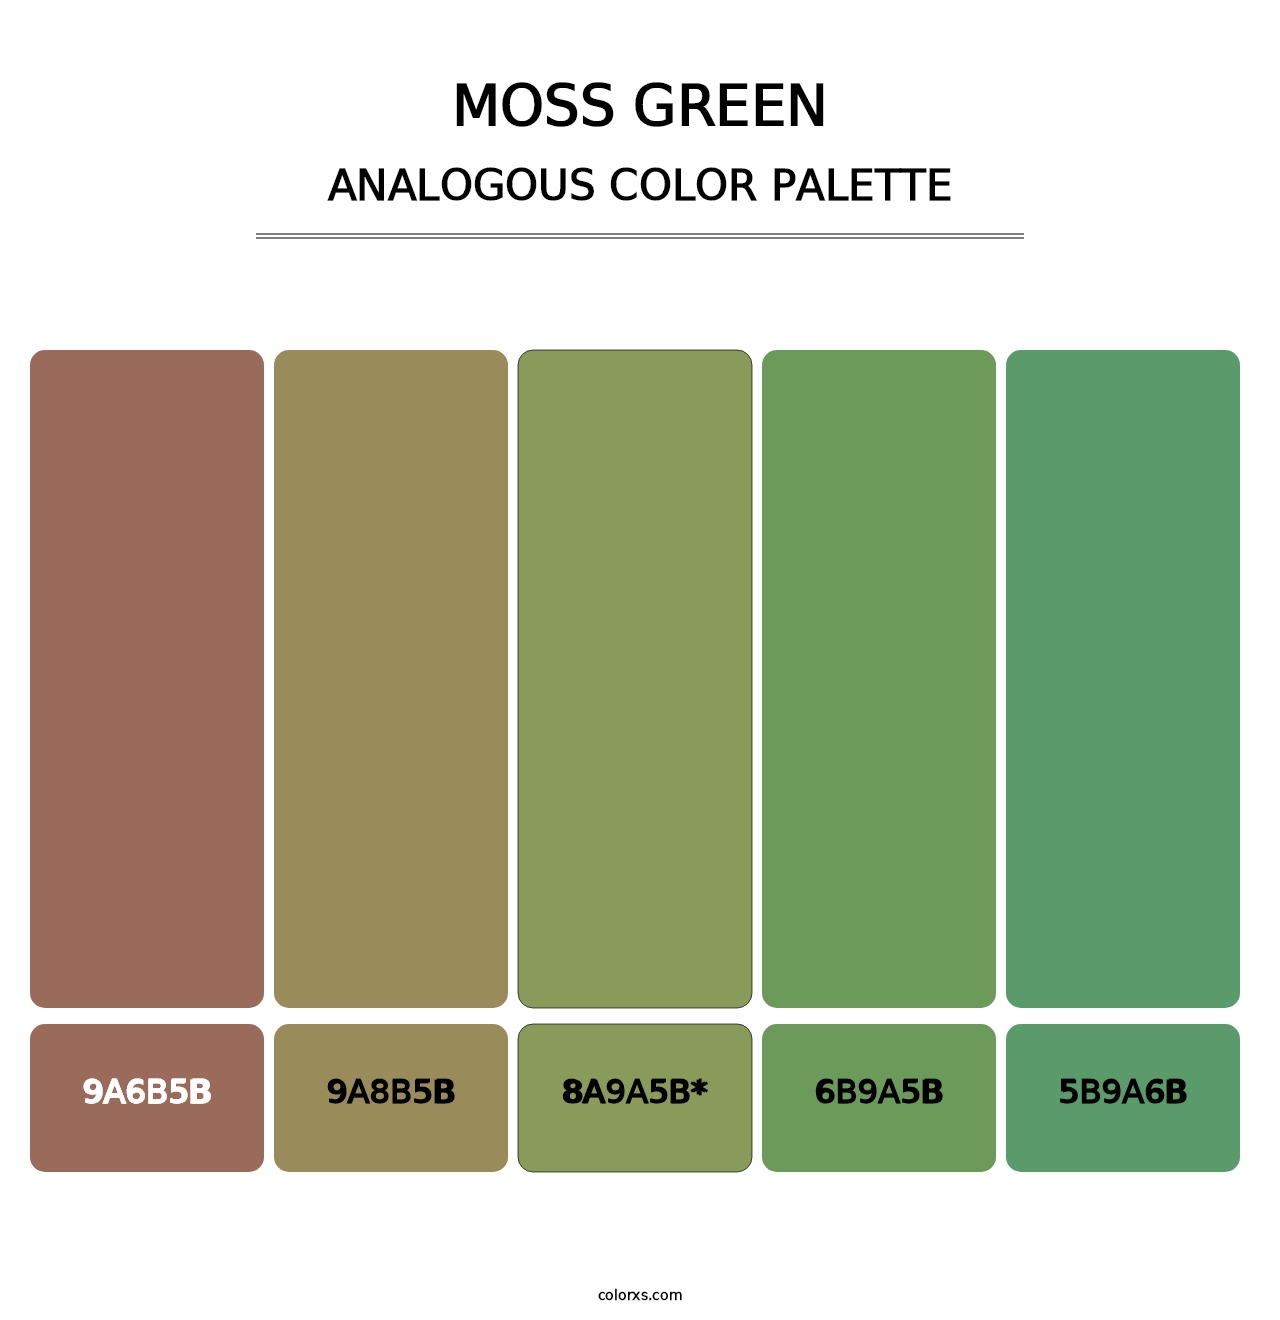 Moss Green - Analogous Color Palette